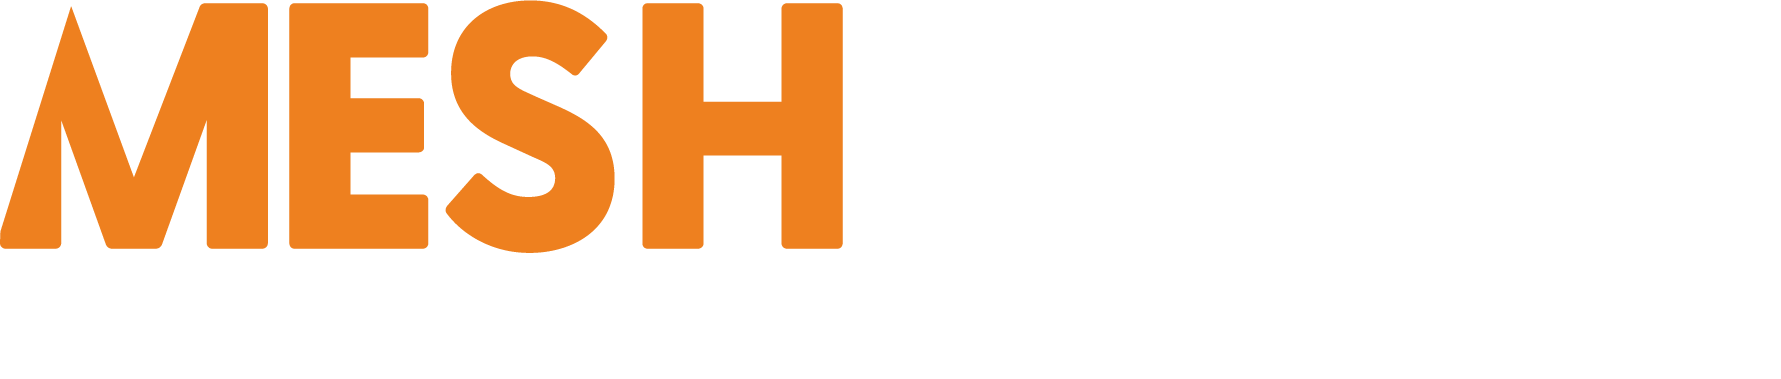 header_ten_logo